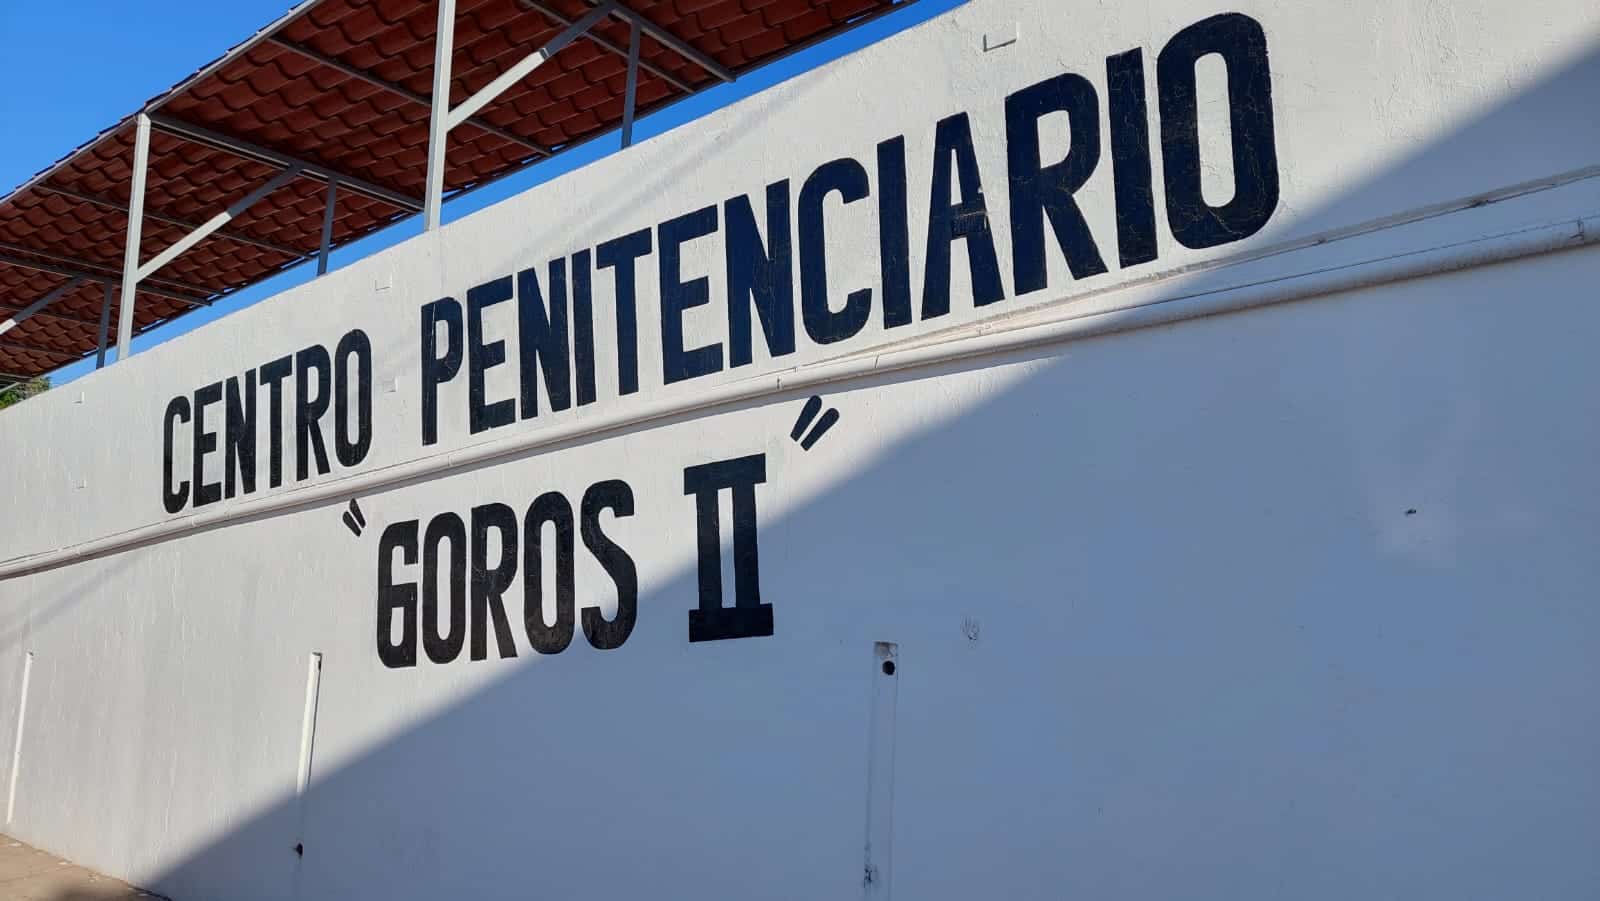 Centro Penitenciario Goros II